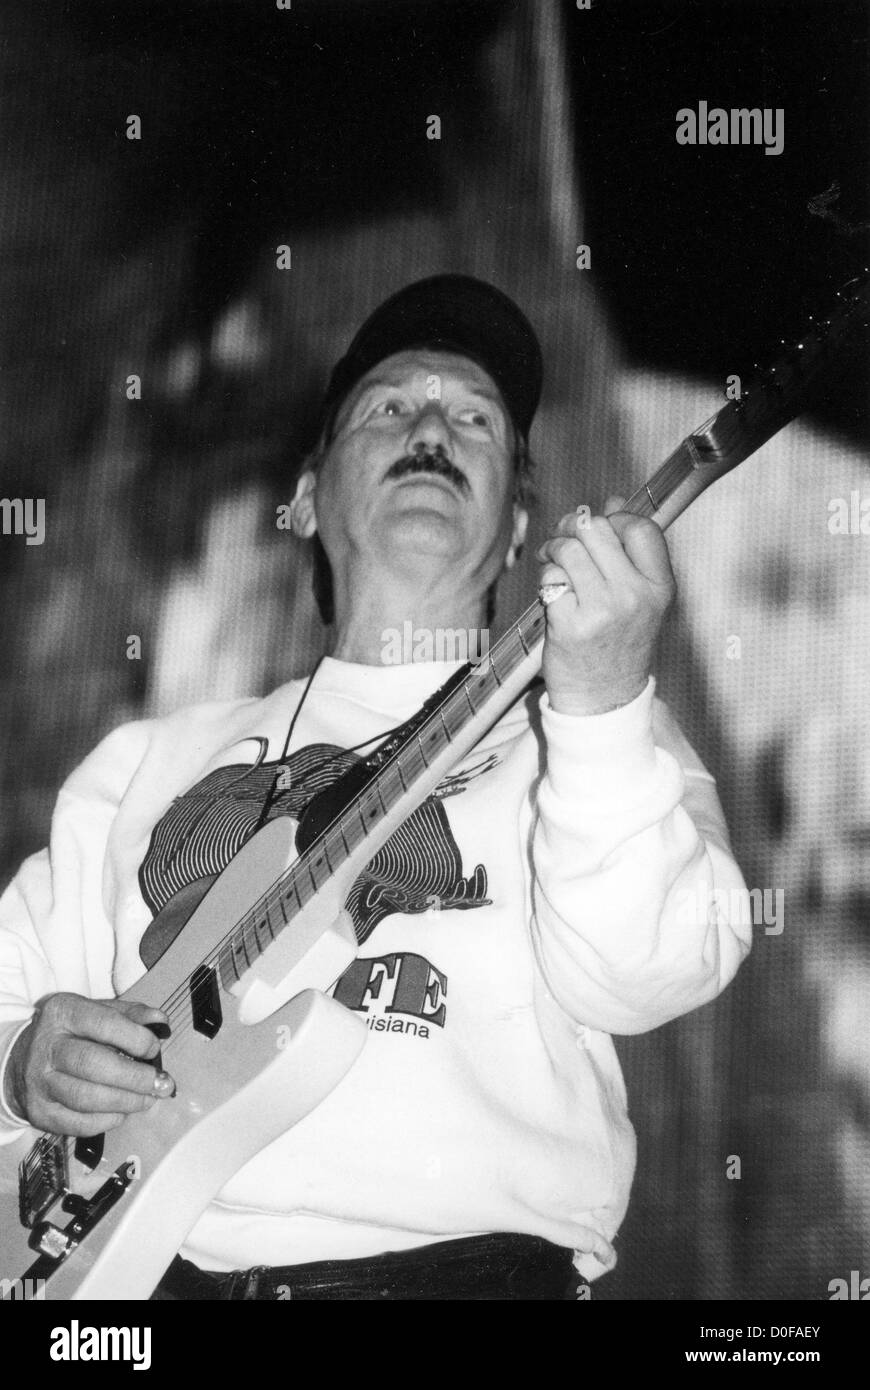 JAMES BURTON U.S. Gitarrist in der Londoner Docklands Arena 17. März 2001 für "Elvis The Concert". Foto Mark Mawston Stockfoto